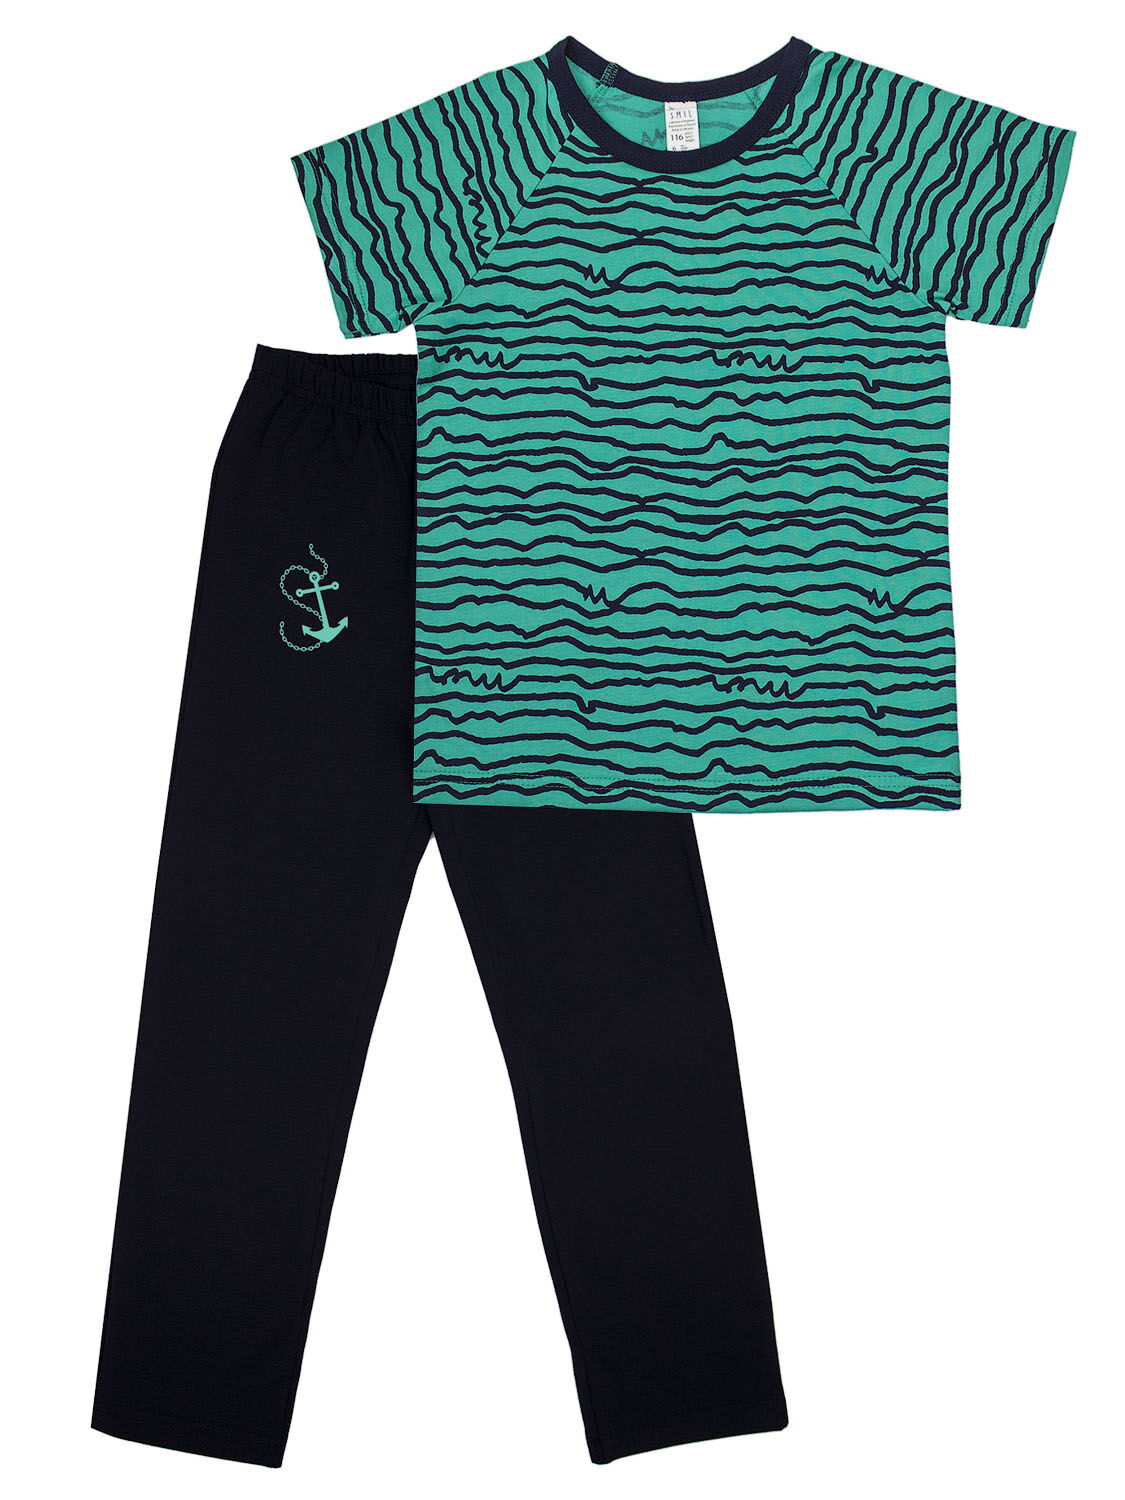 Пижама для мальчика (футболка+штаны) SMIL темно-бирюзовая 104474/104475 - цена